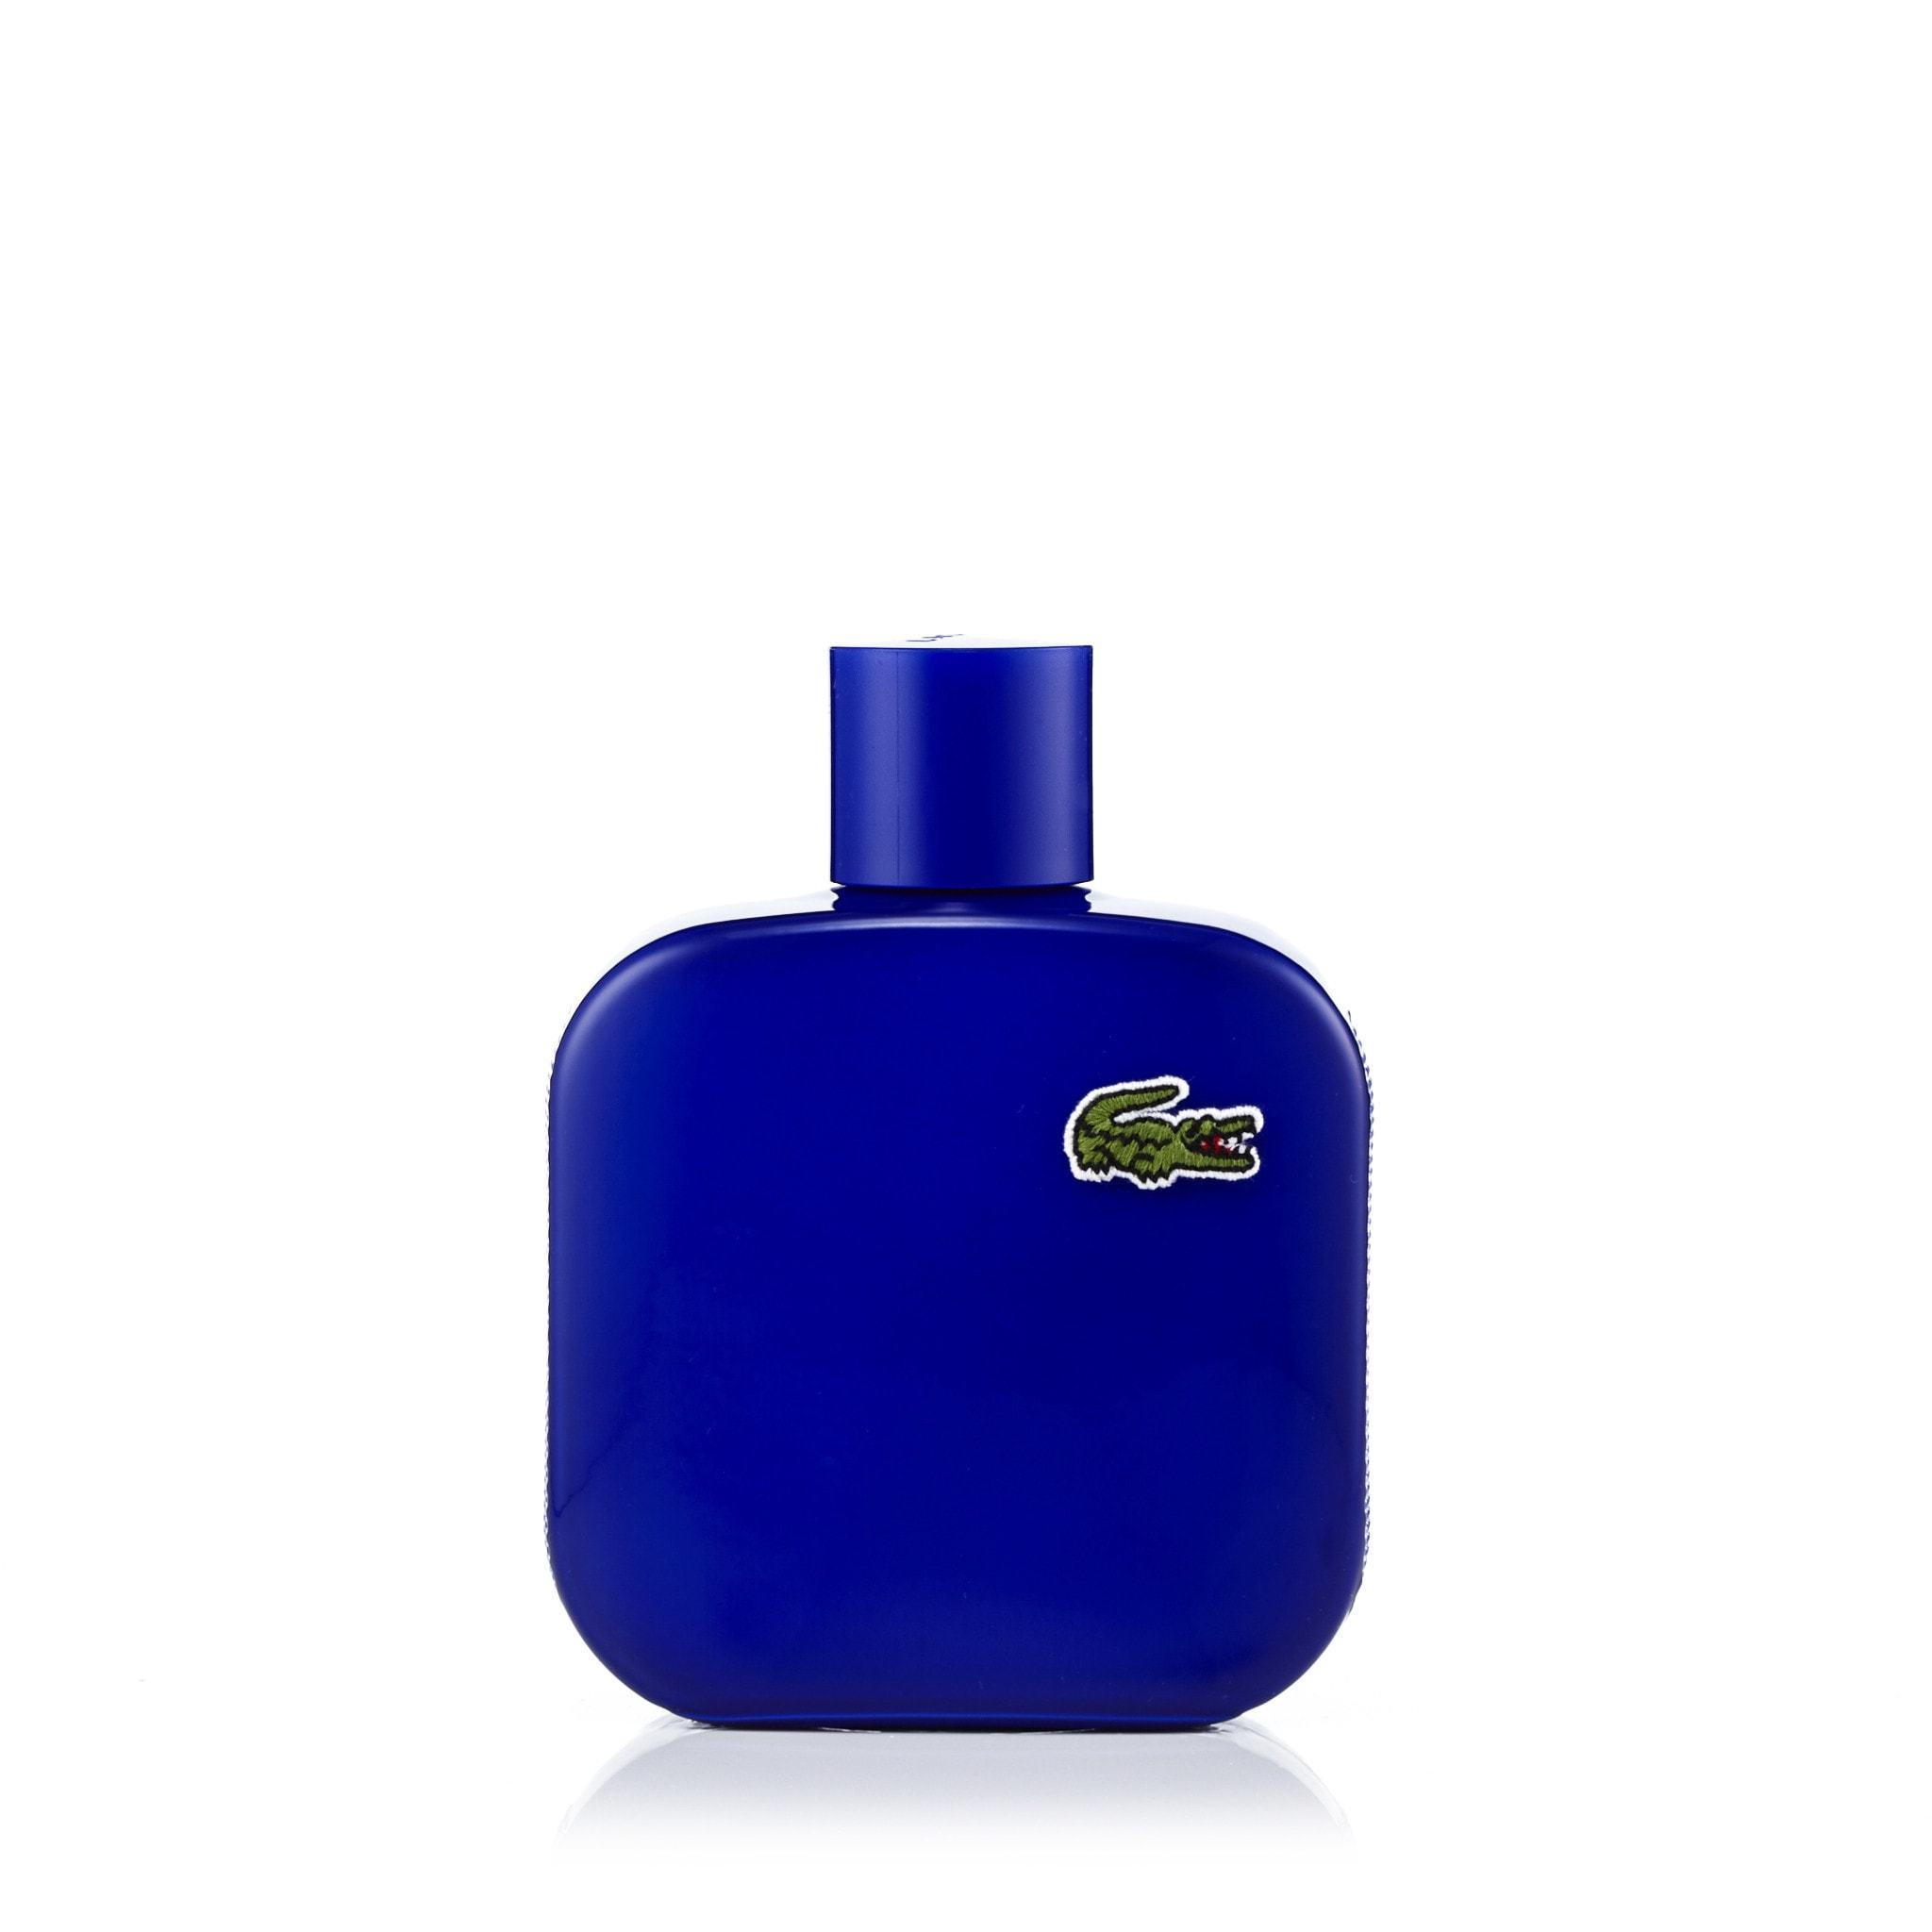 lacoste blue perfume price